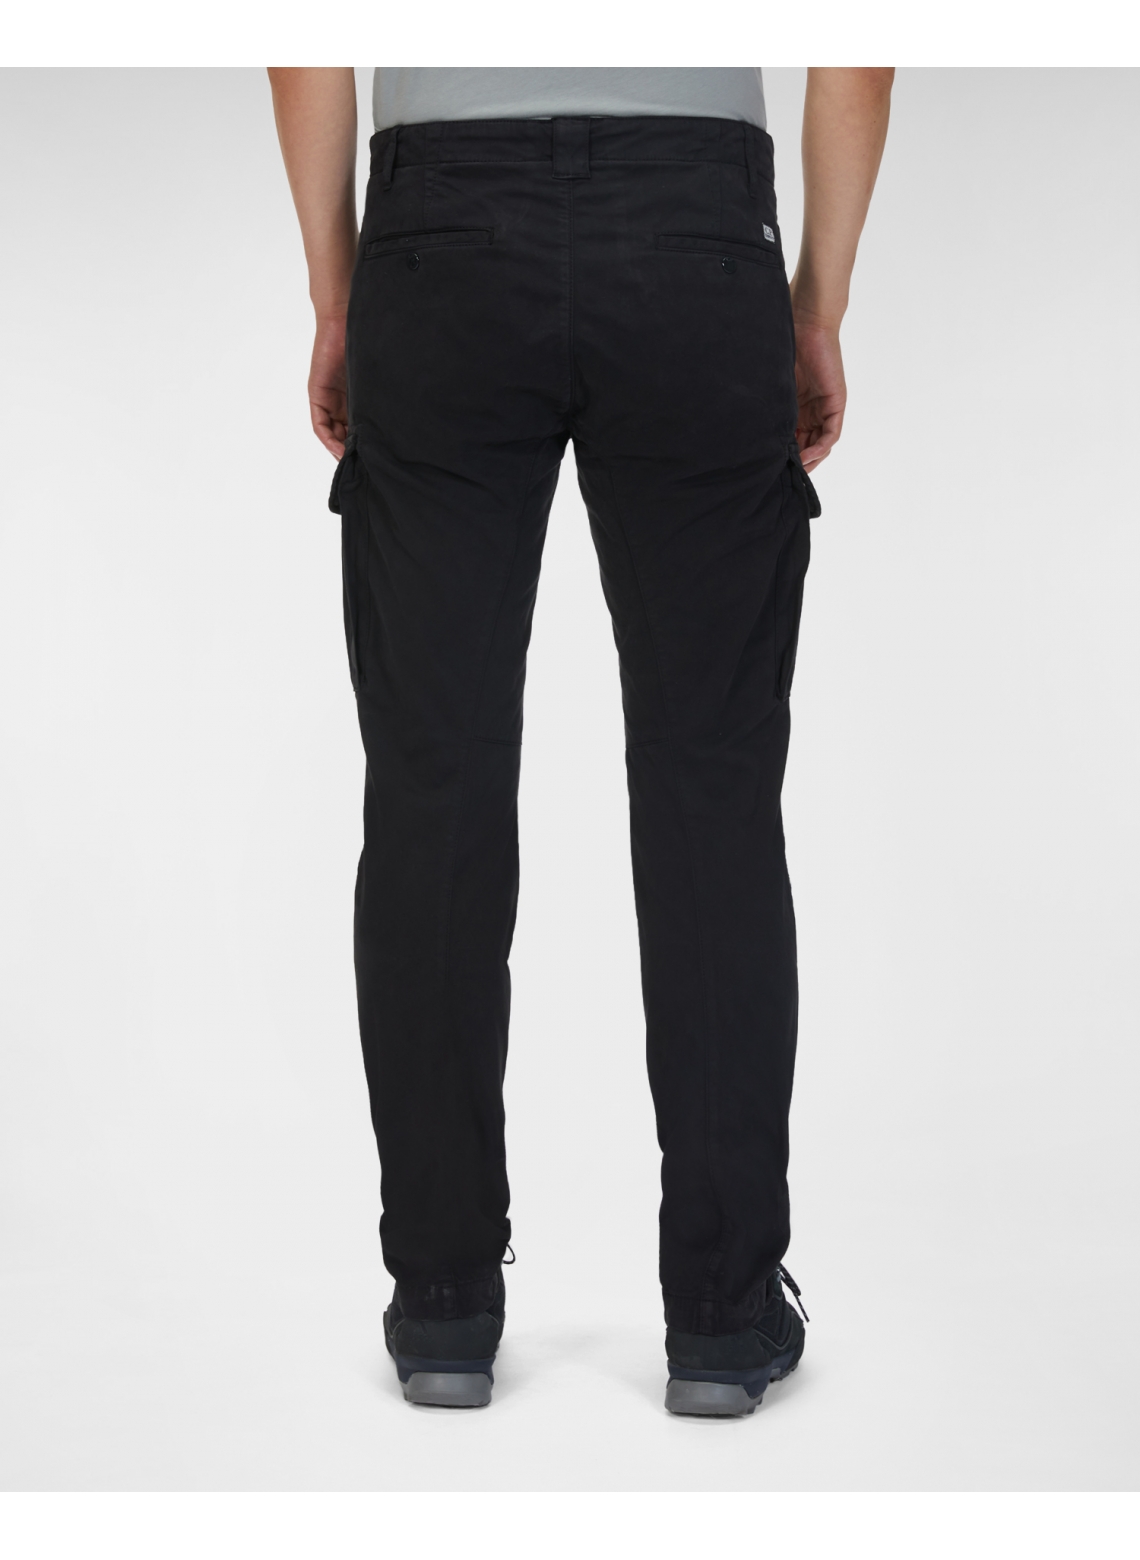 Men's Drawstring Cargo Pants in Black